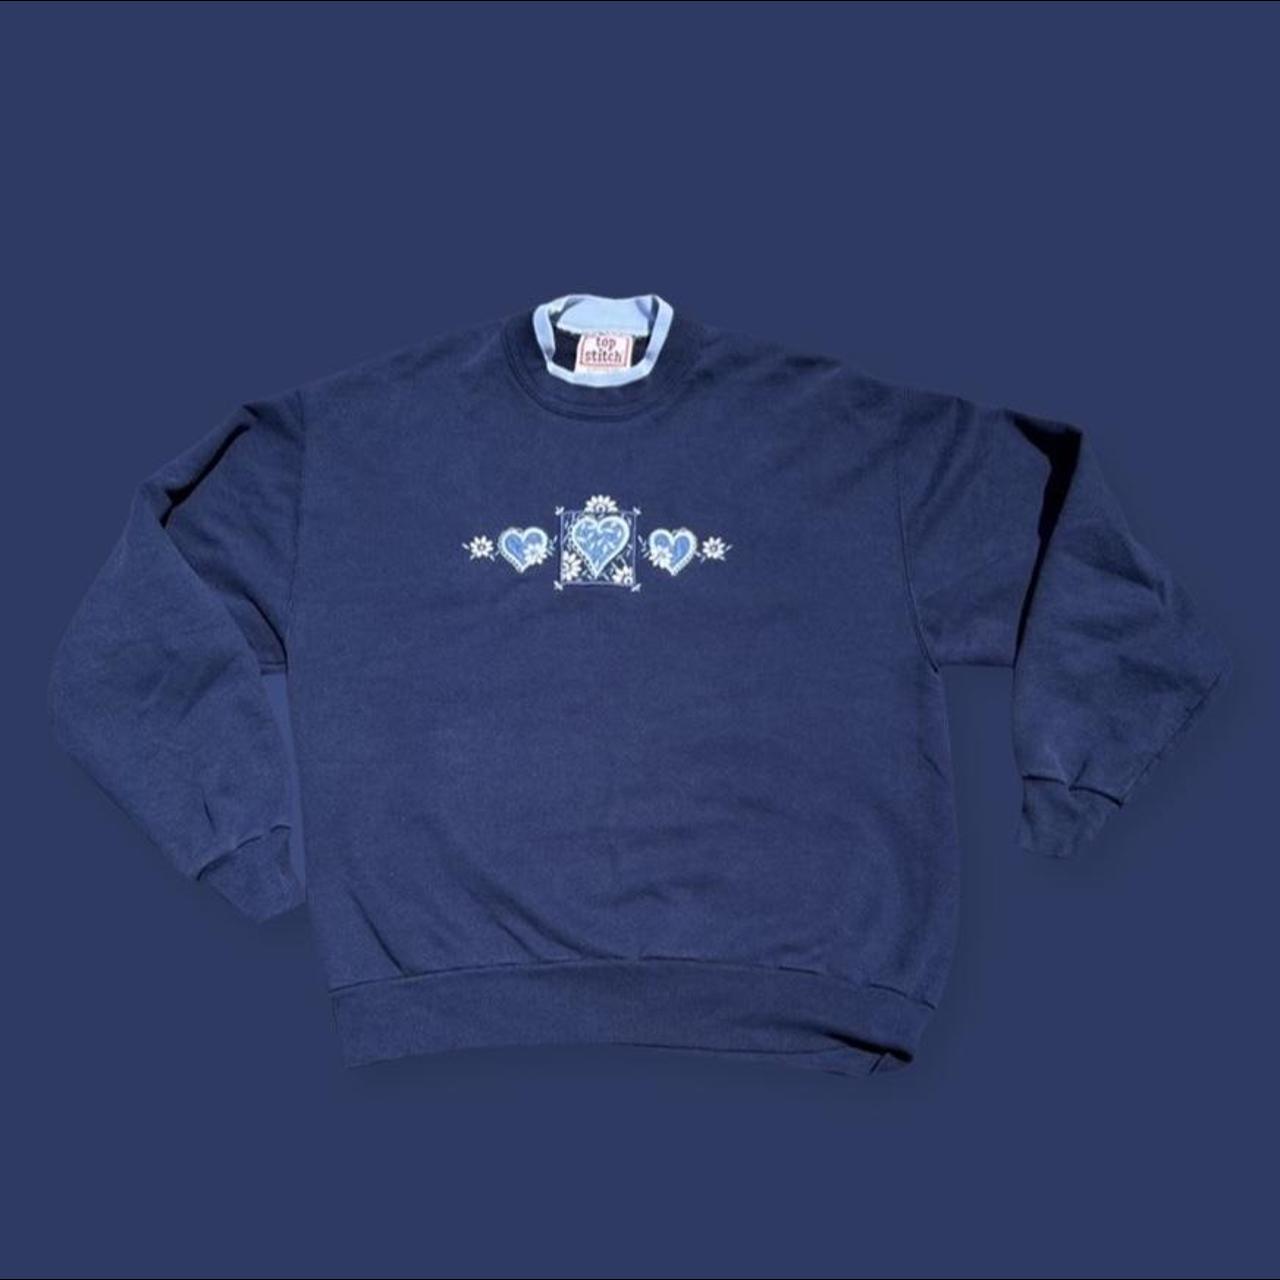 Top Stitch Men's Navy Sweatshirt